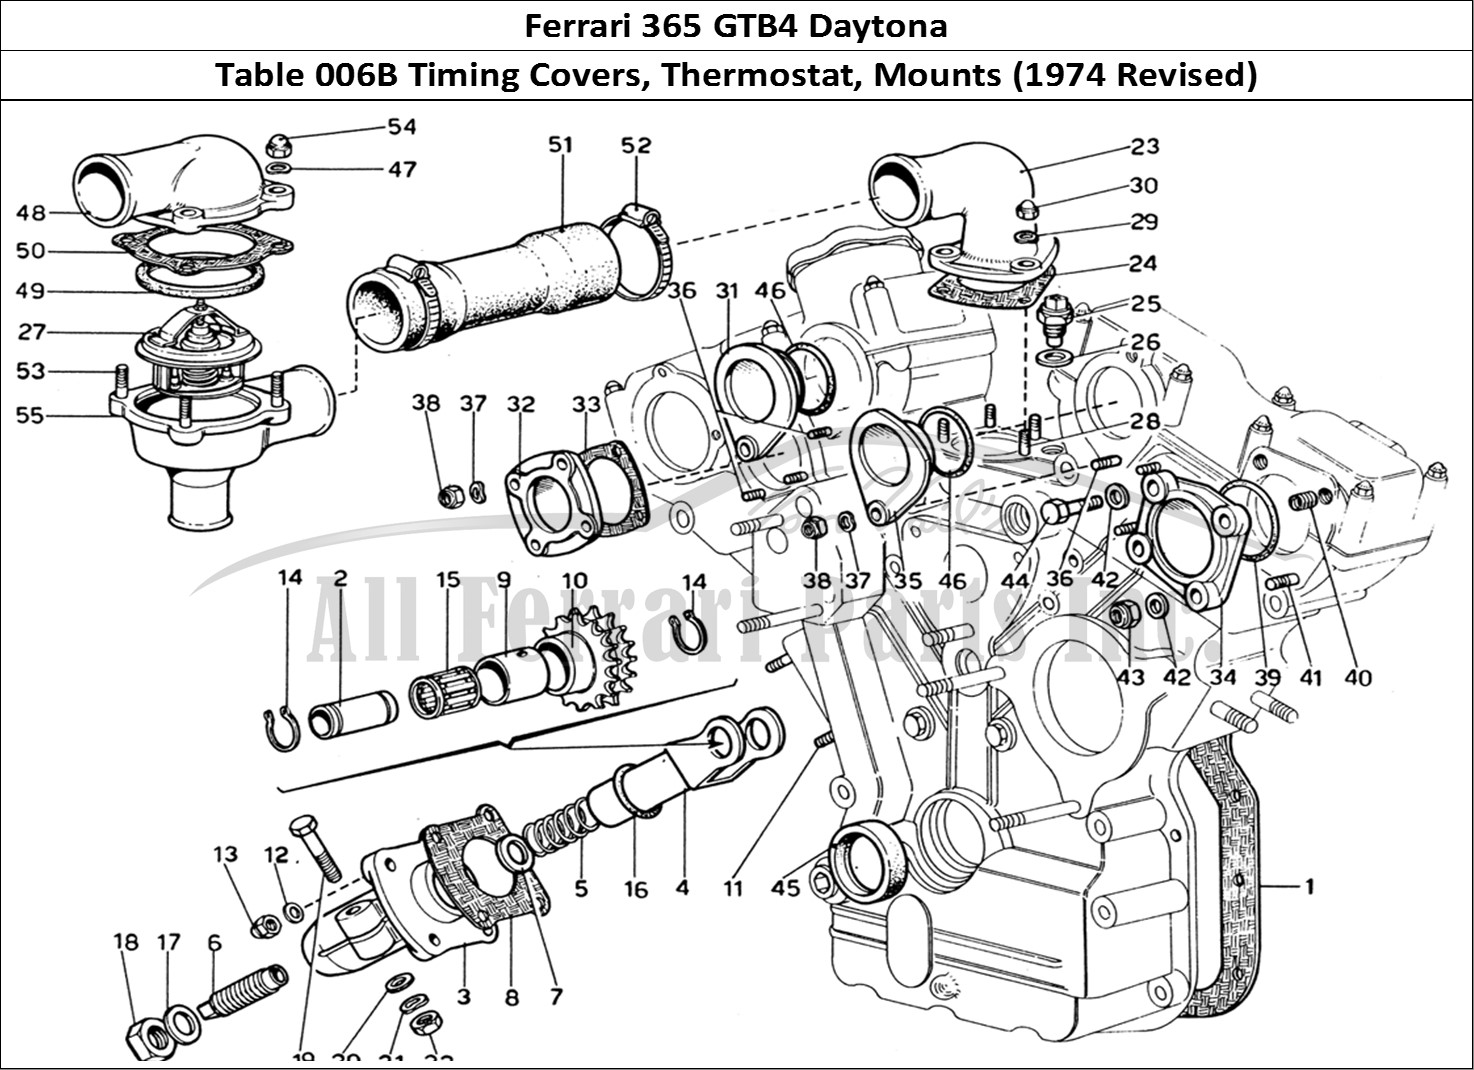 Ferrari Parts Ferrari 365 GTB4 Daytona (1969) Page 006 Timing (1974 Revision)